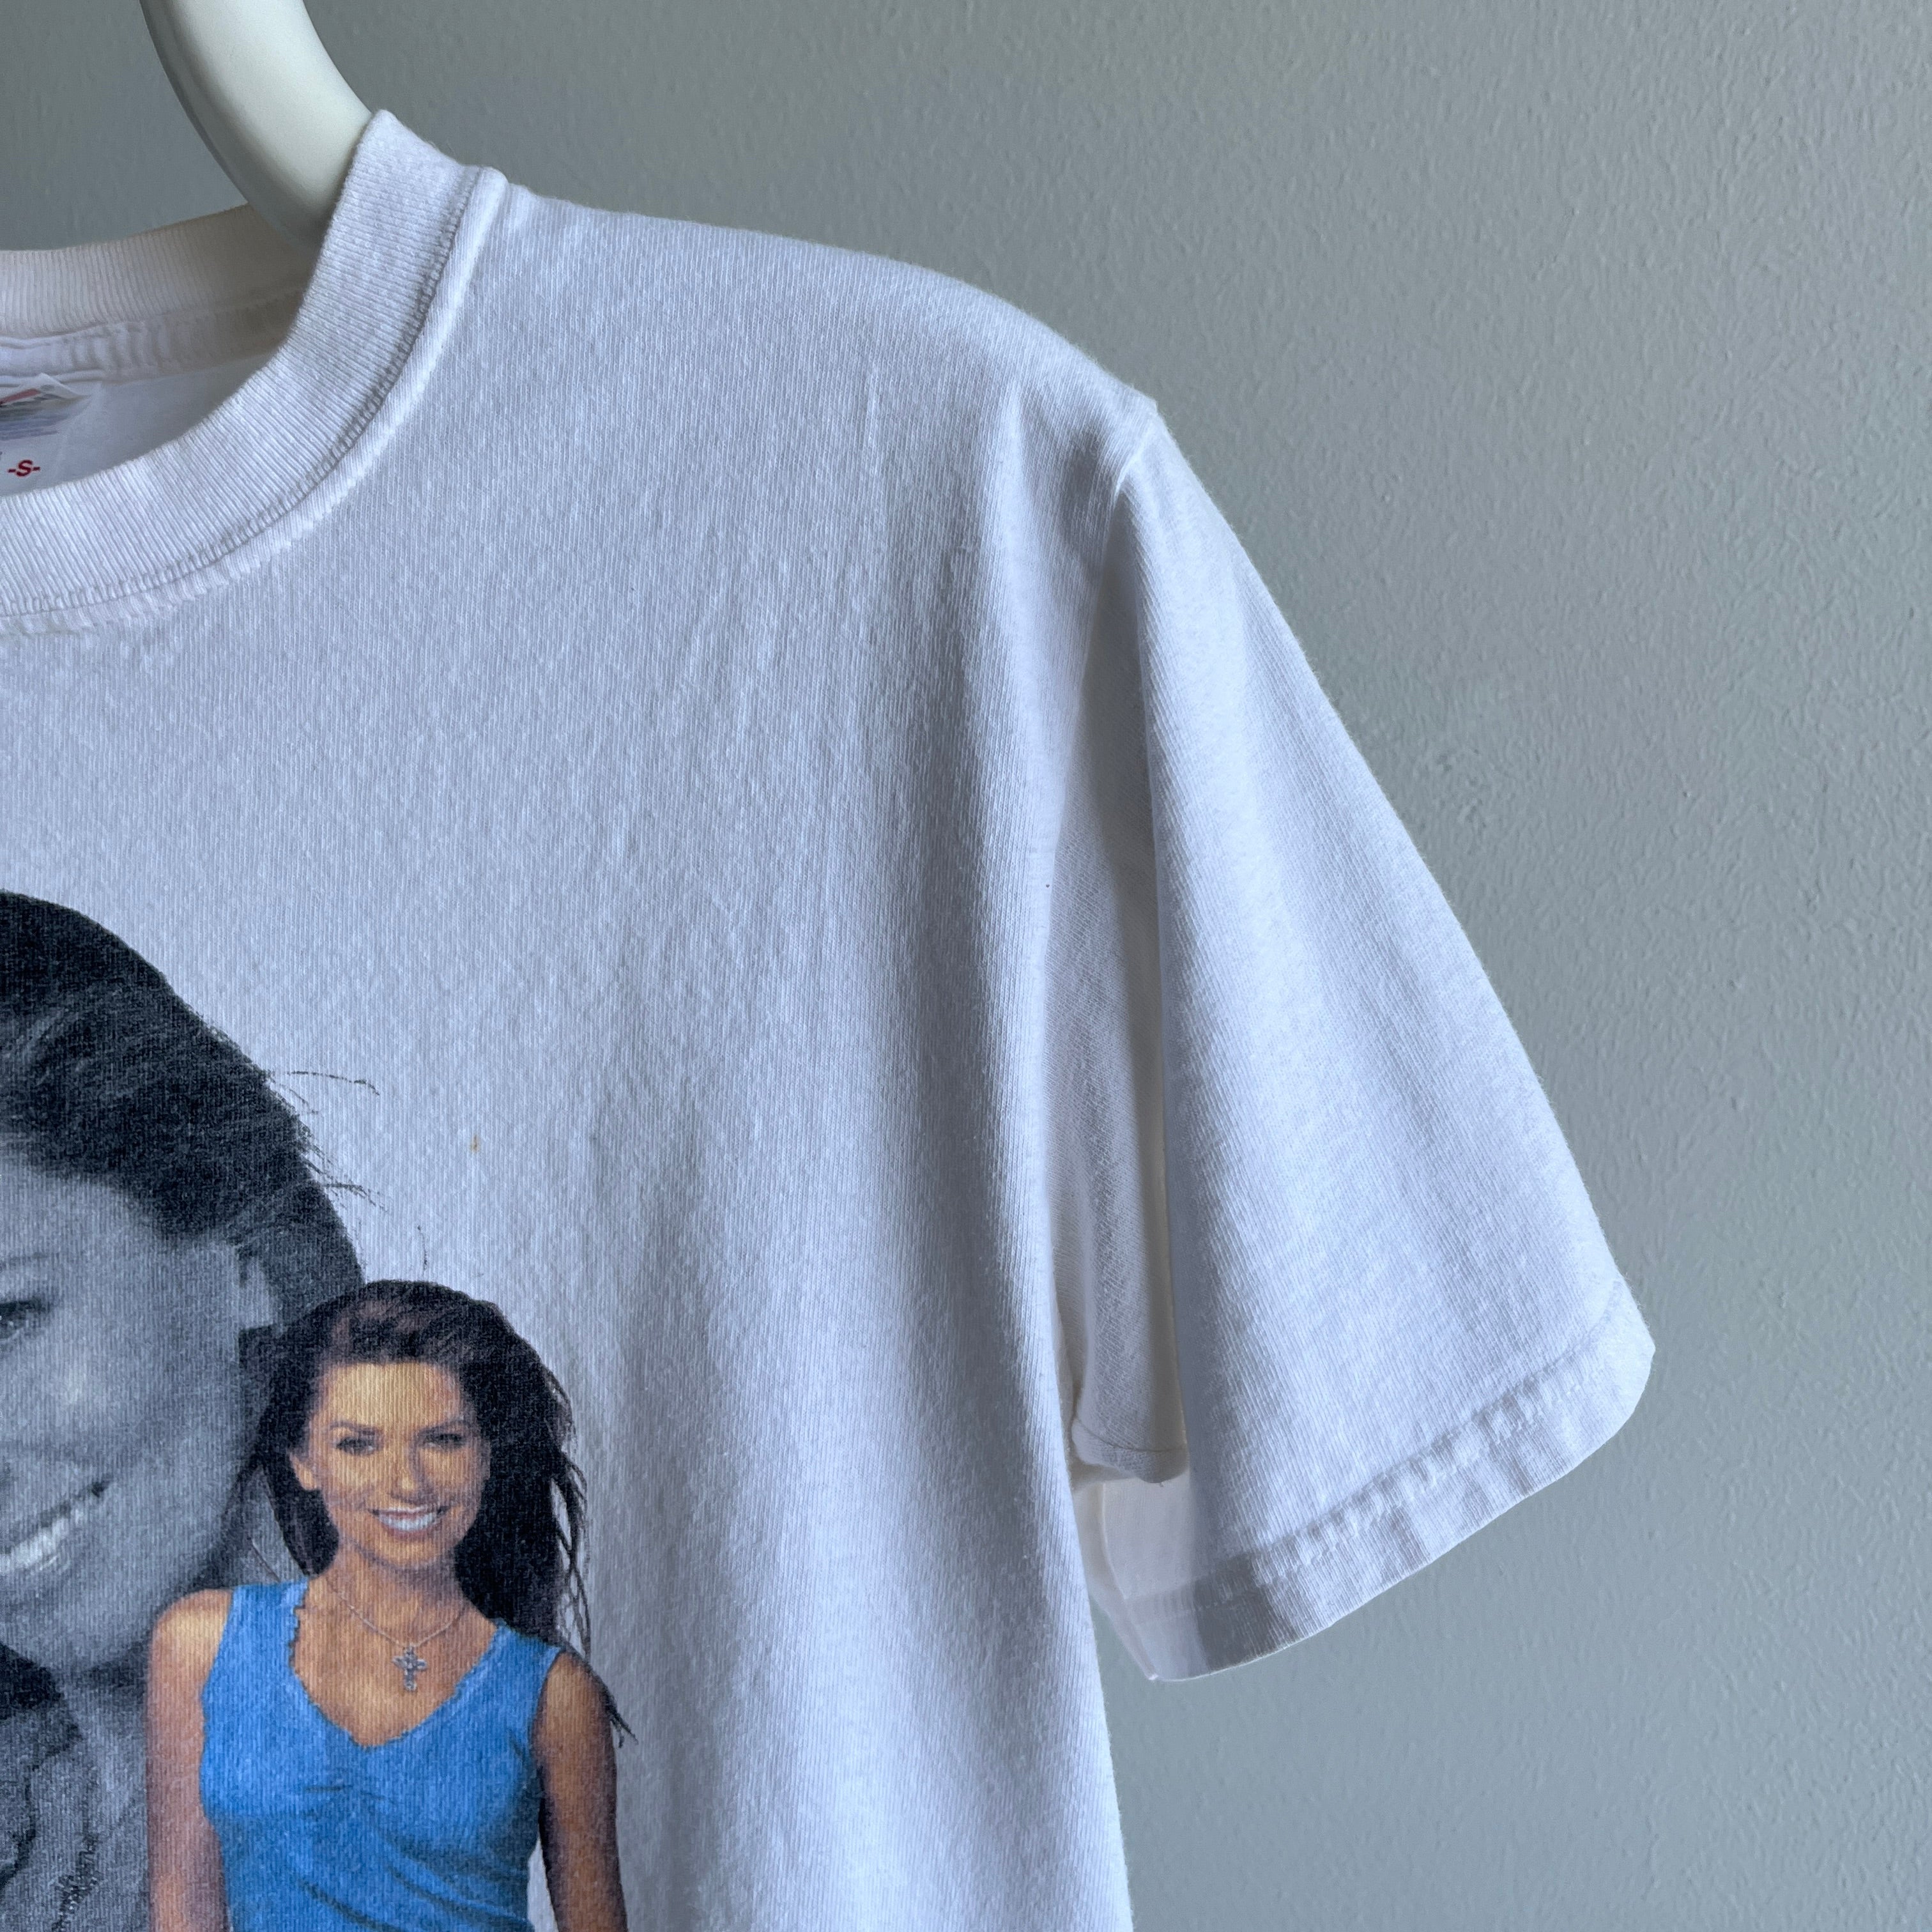 2003 Shania Twain Tour T-Shirt